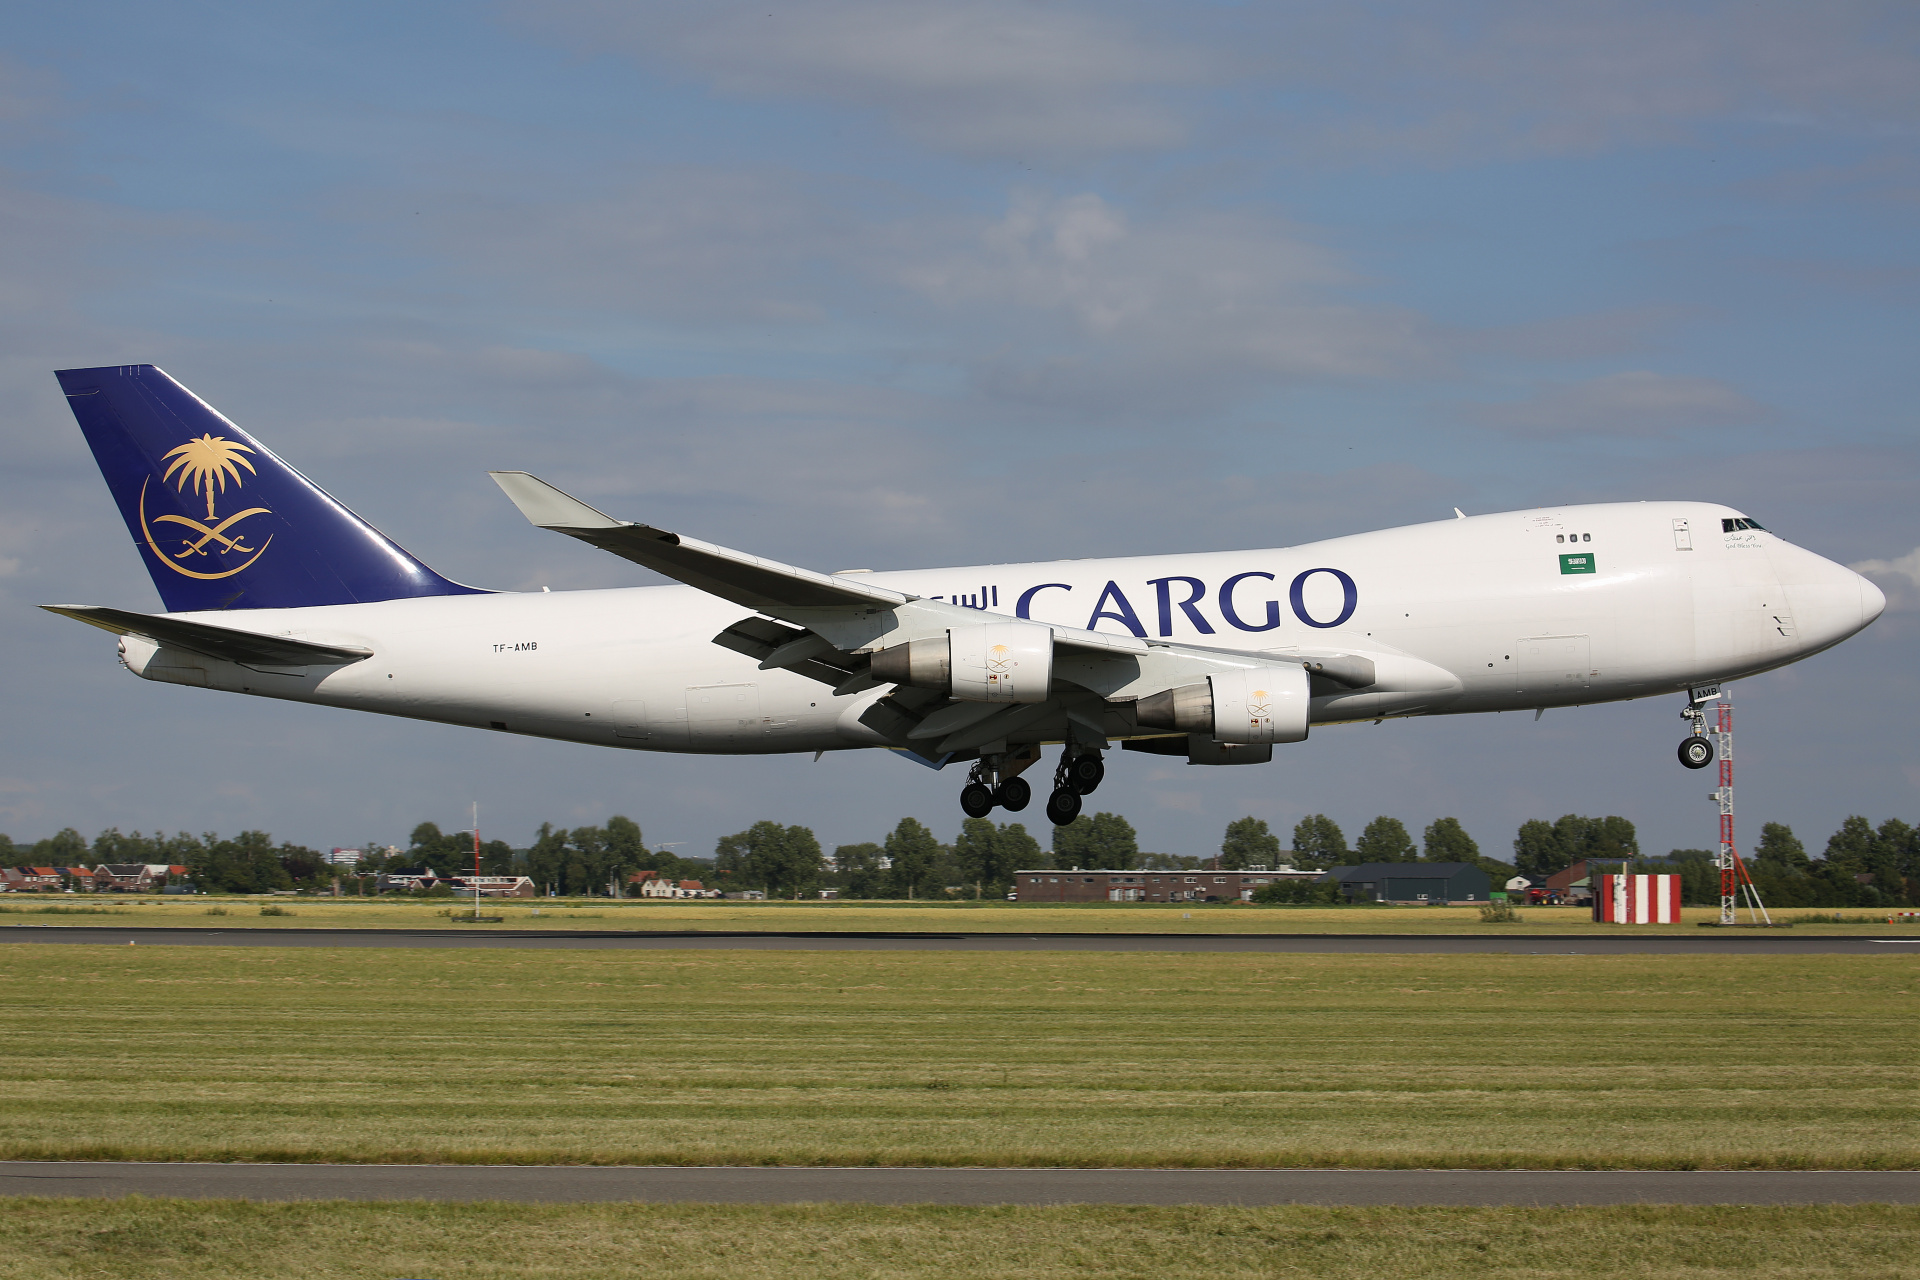 TF-AMB, Saudia Cargo (Air Atlanta Icelandic) (Samoloty » Spotting na Schiphol » Boeing 747-400F)